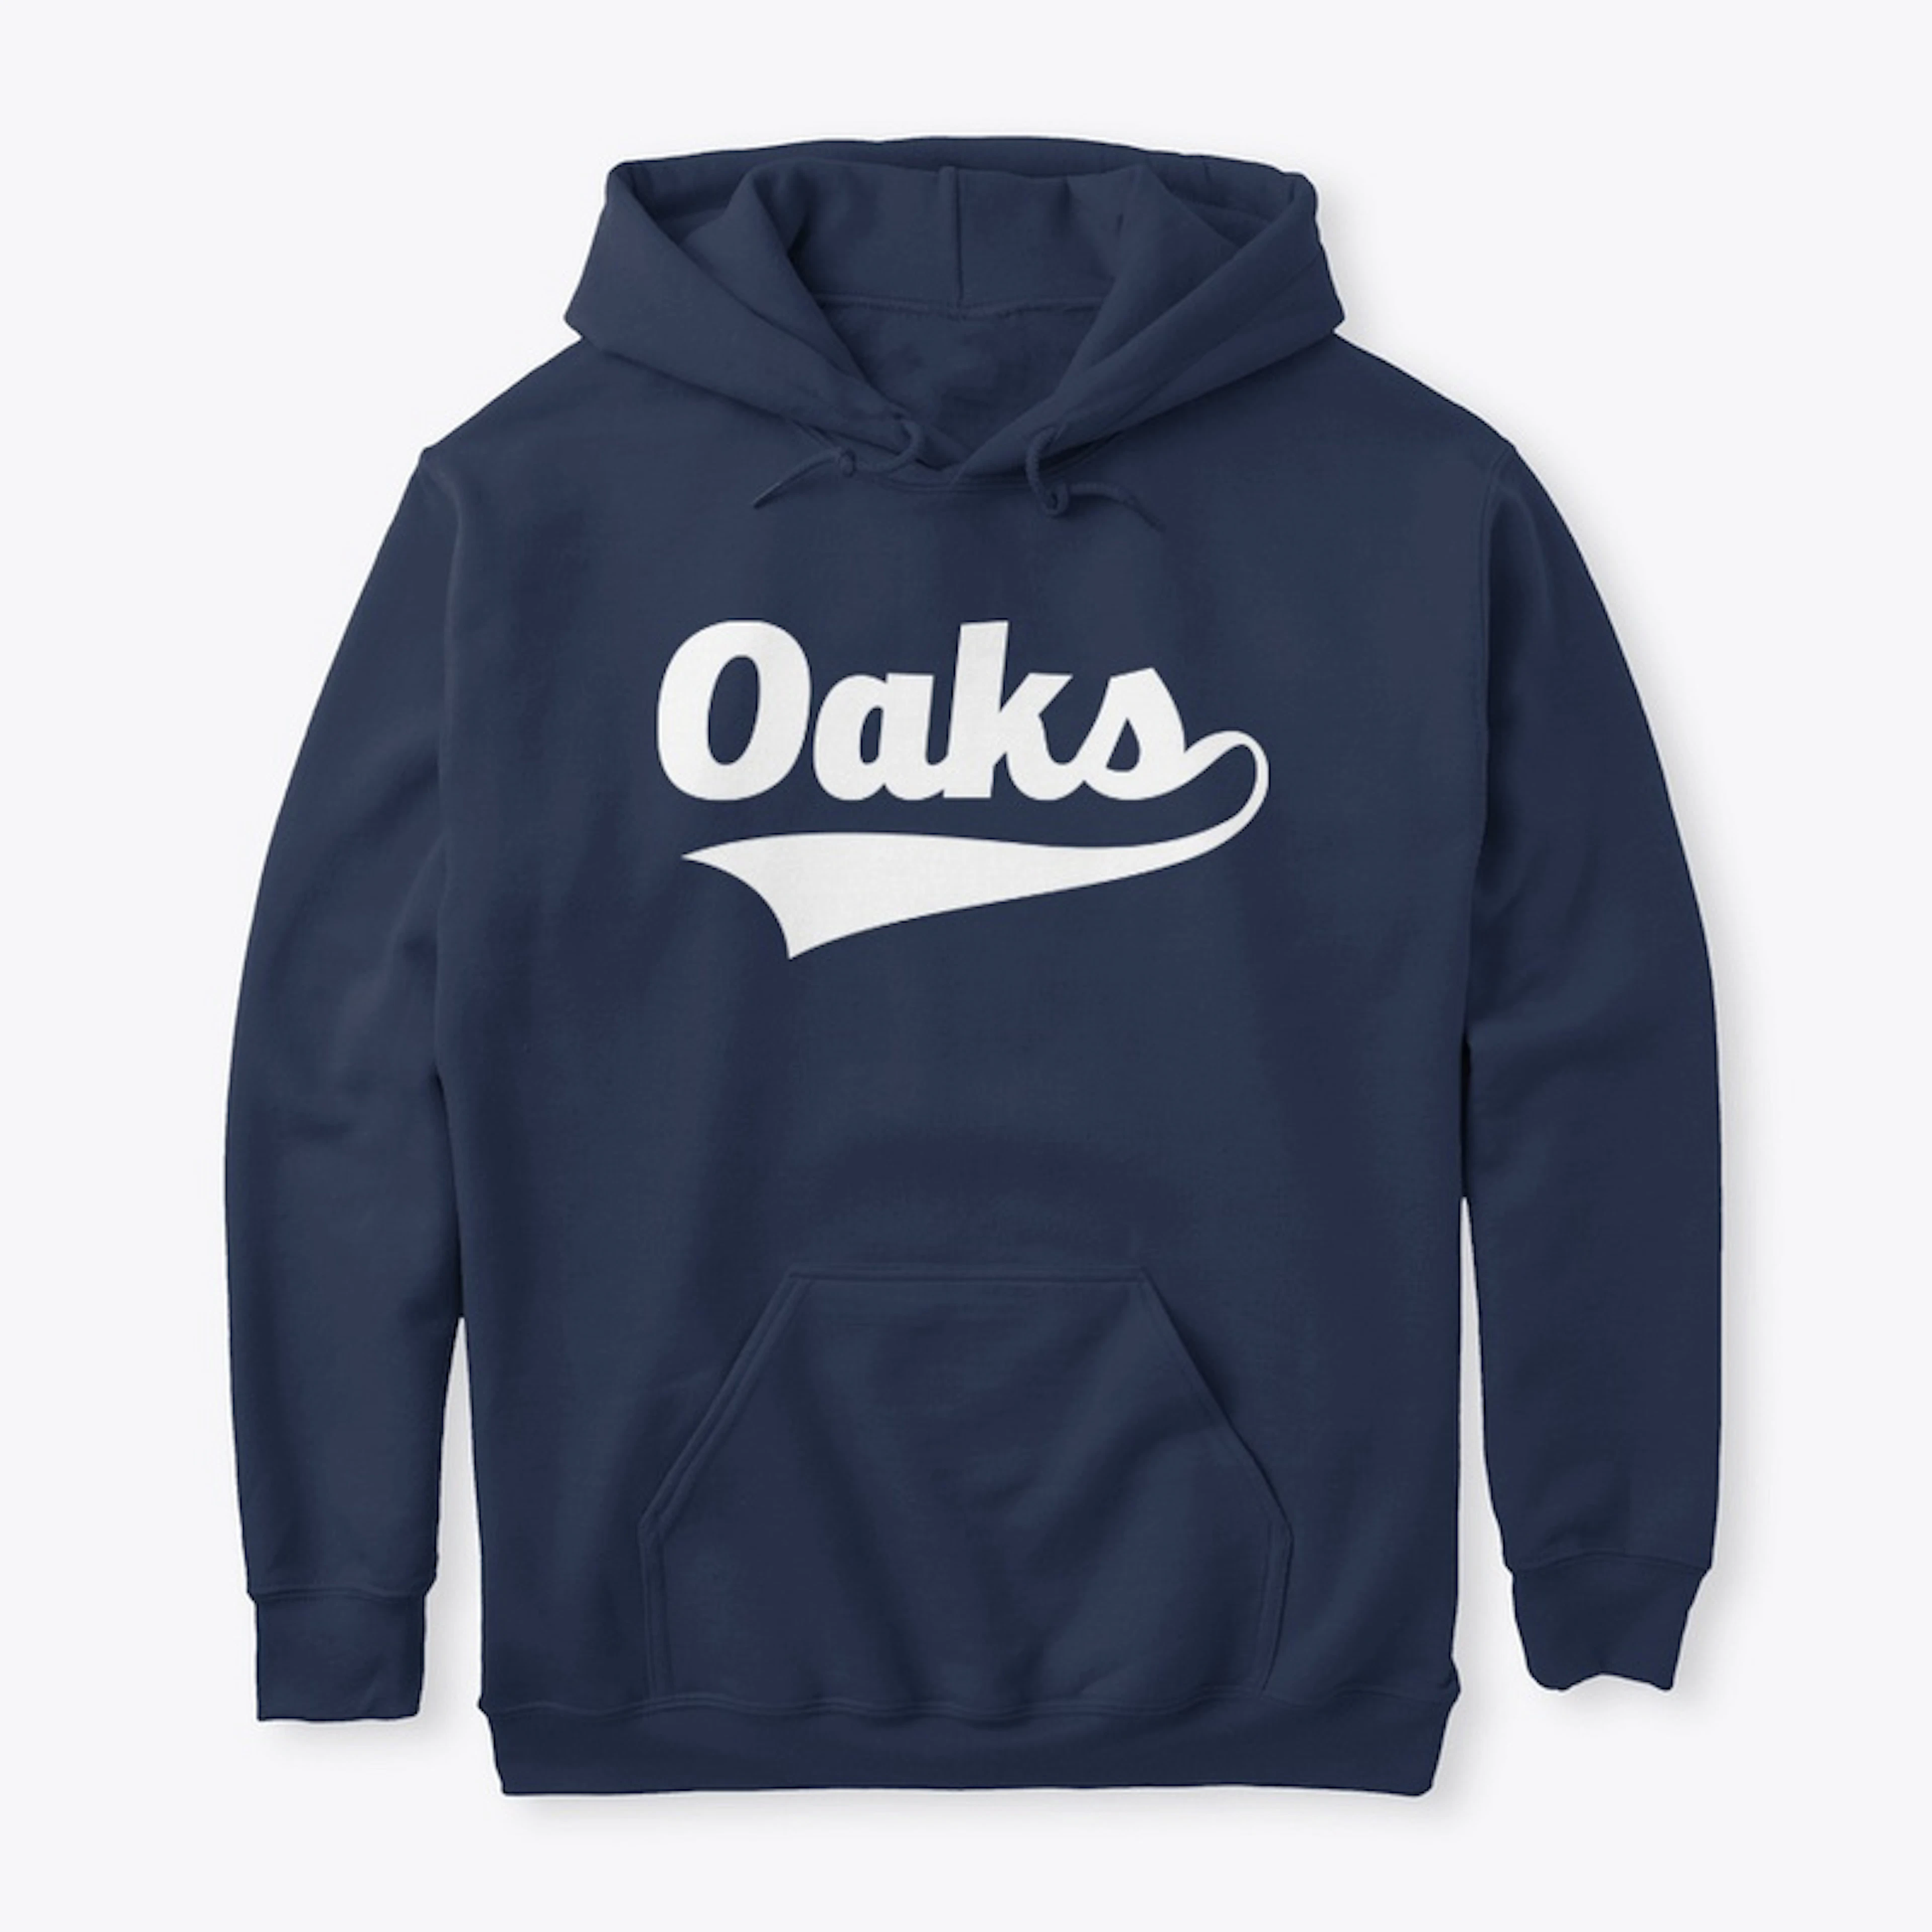 Oaks Swoosh Design